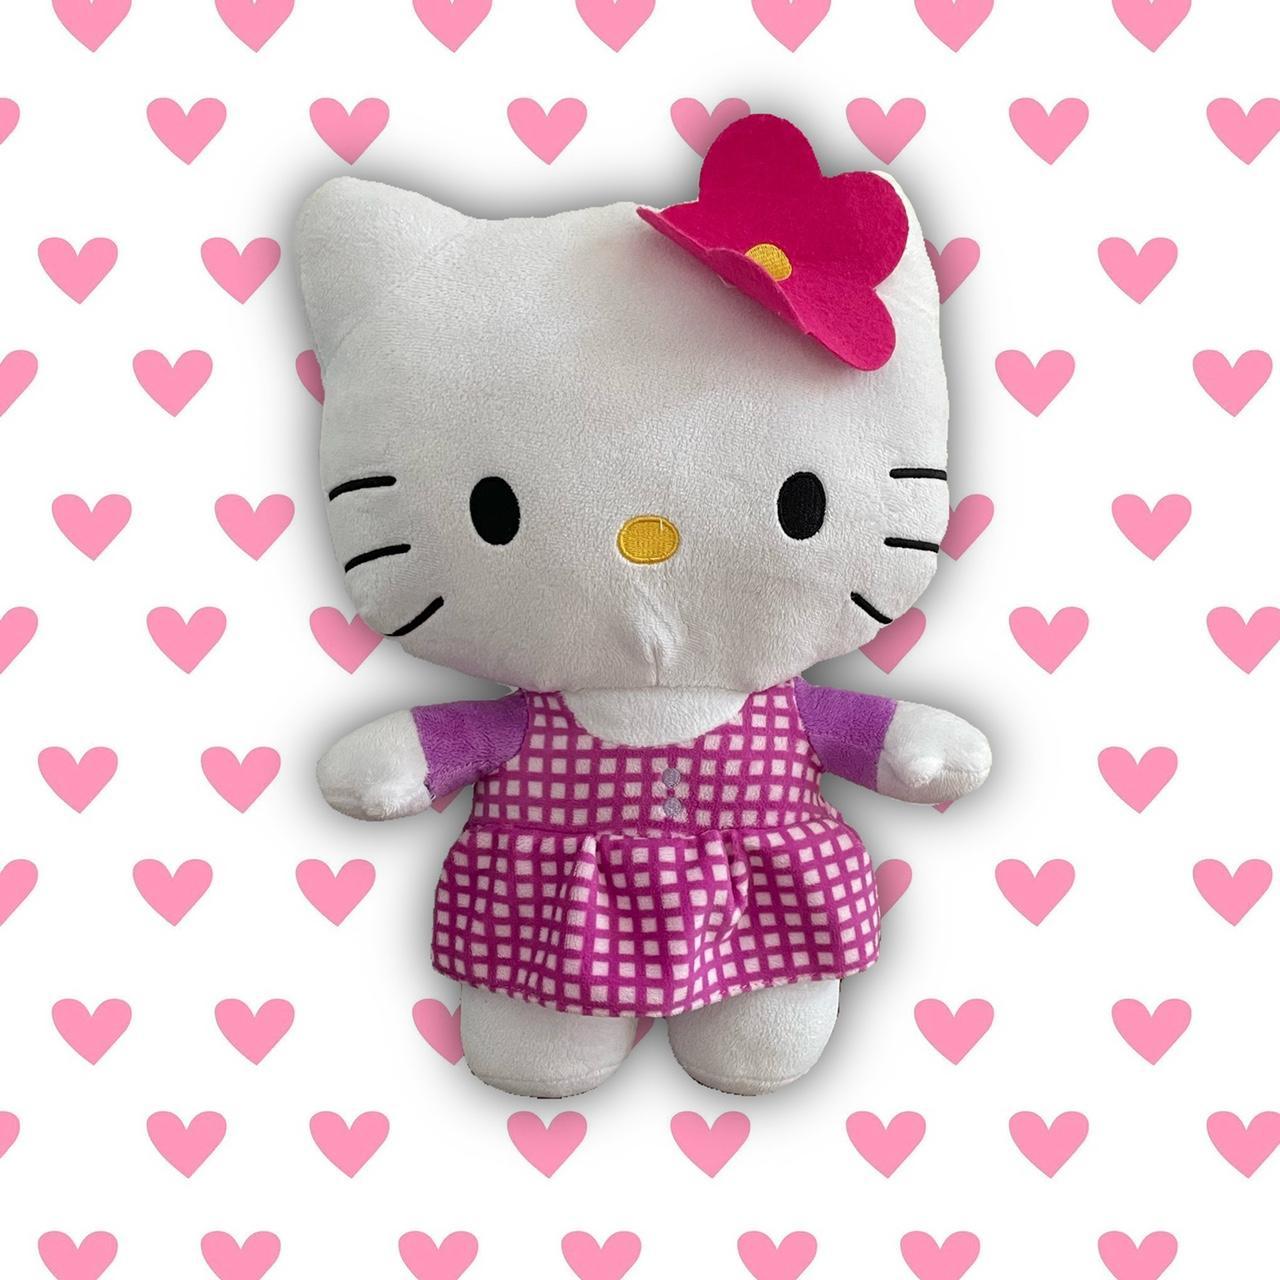 Product Image 1 - 2013 Hello Kitty plush. So